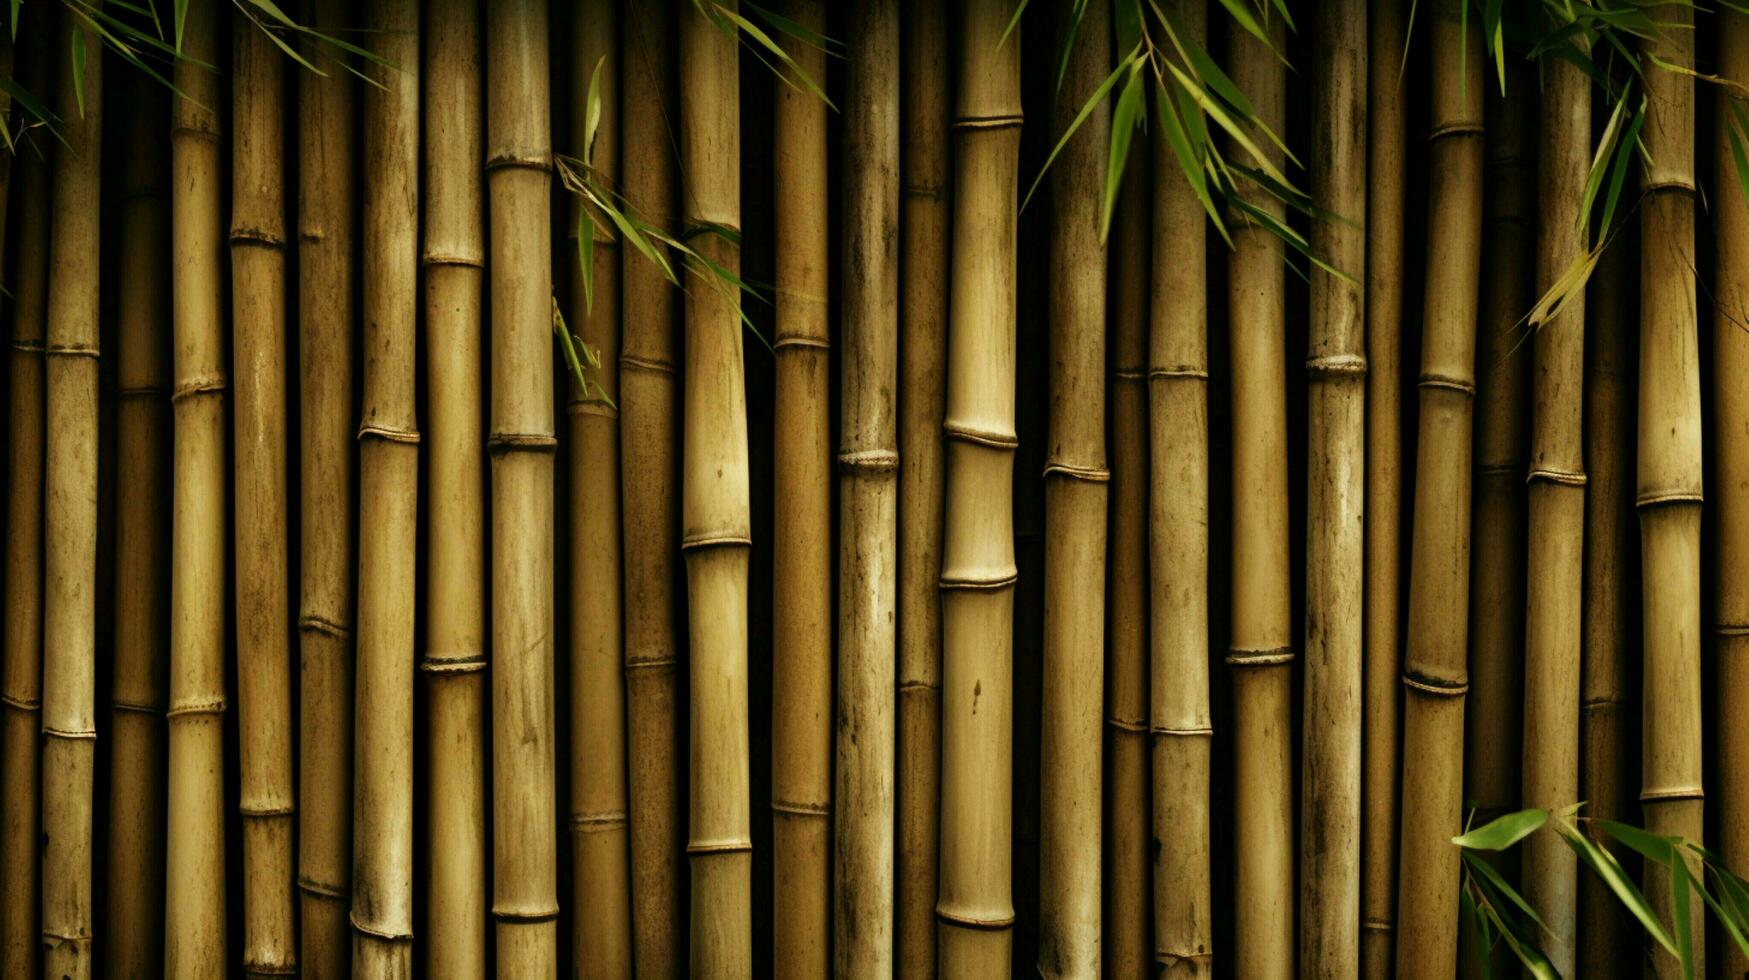 ai generado bambú texturas antecedentes foto